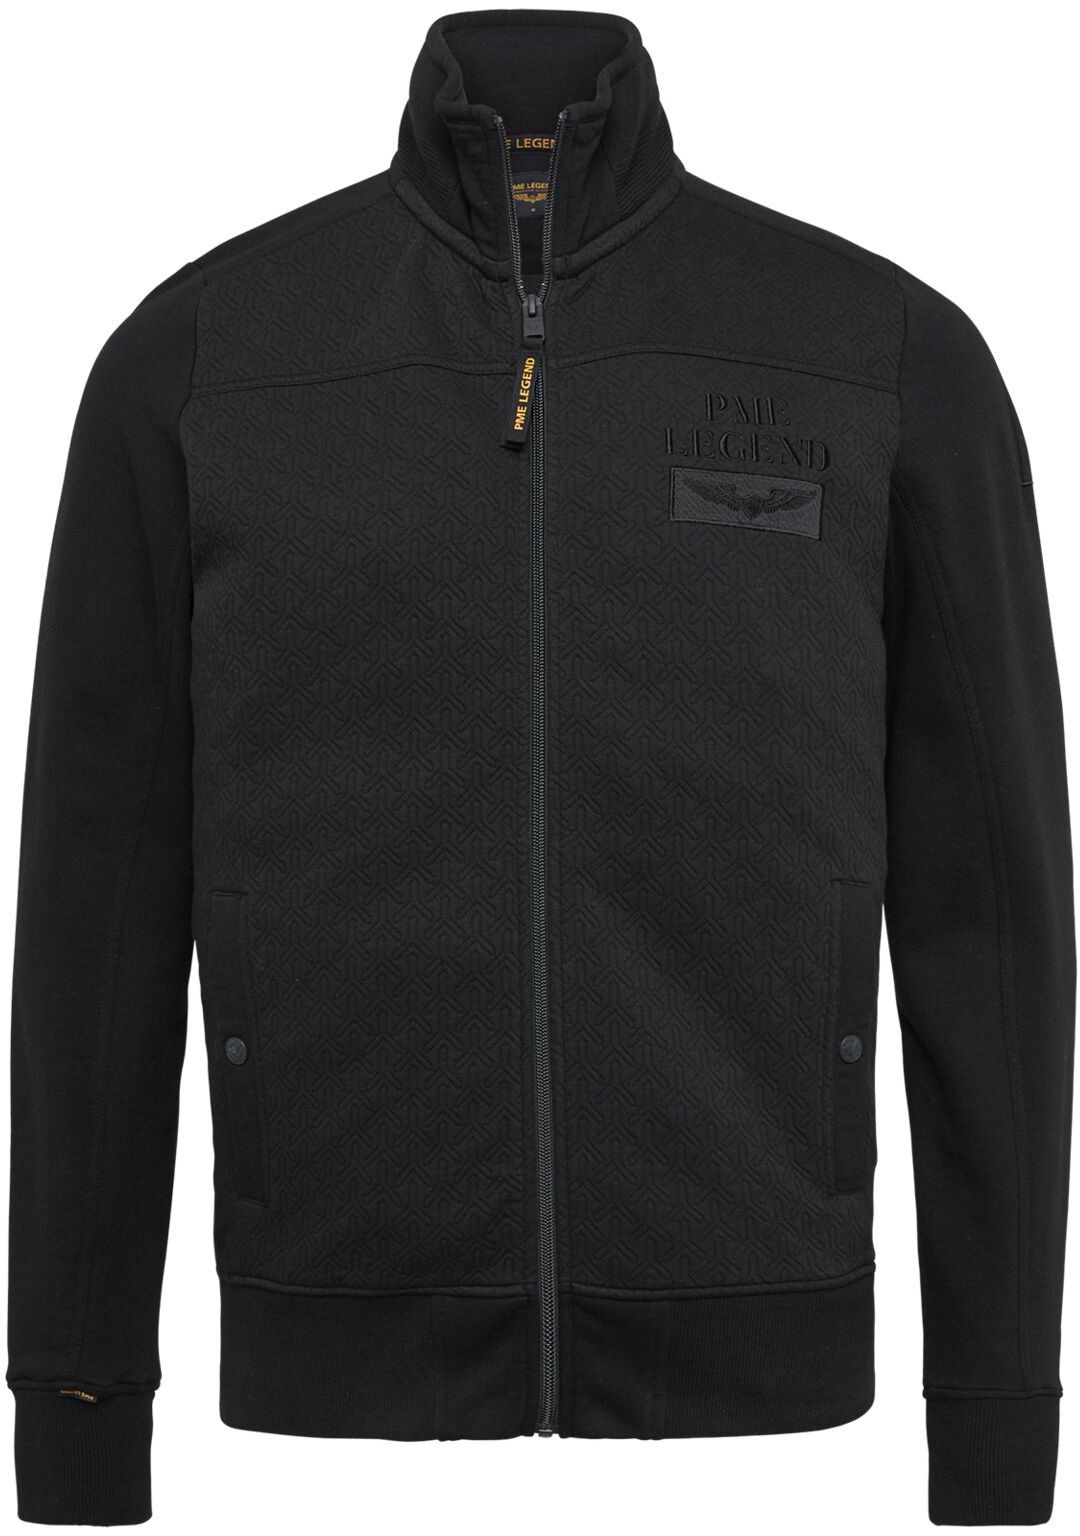 PME Legend Zip Jacket Black size 3XL